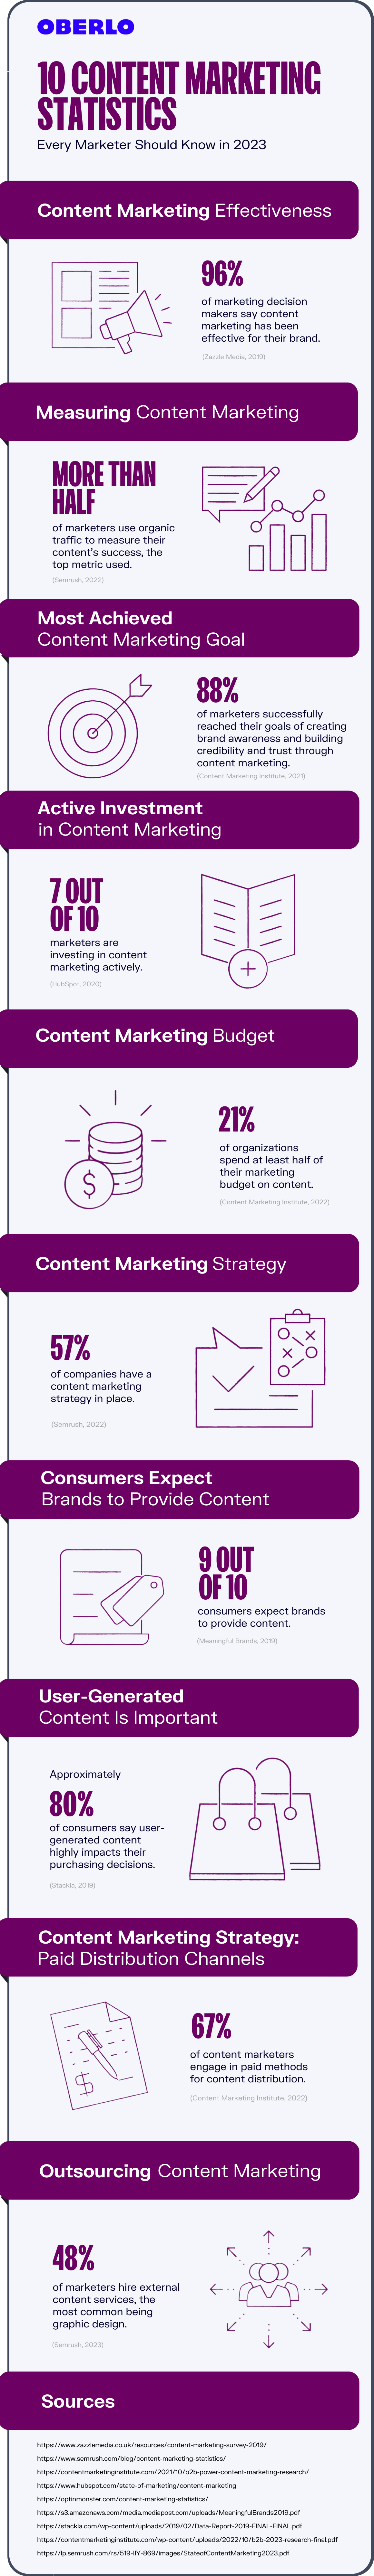 content marketing statistics full infographic